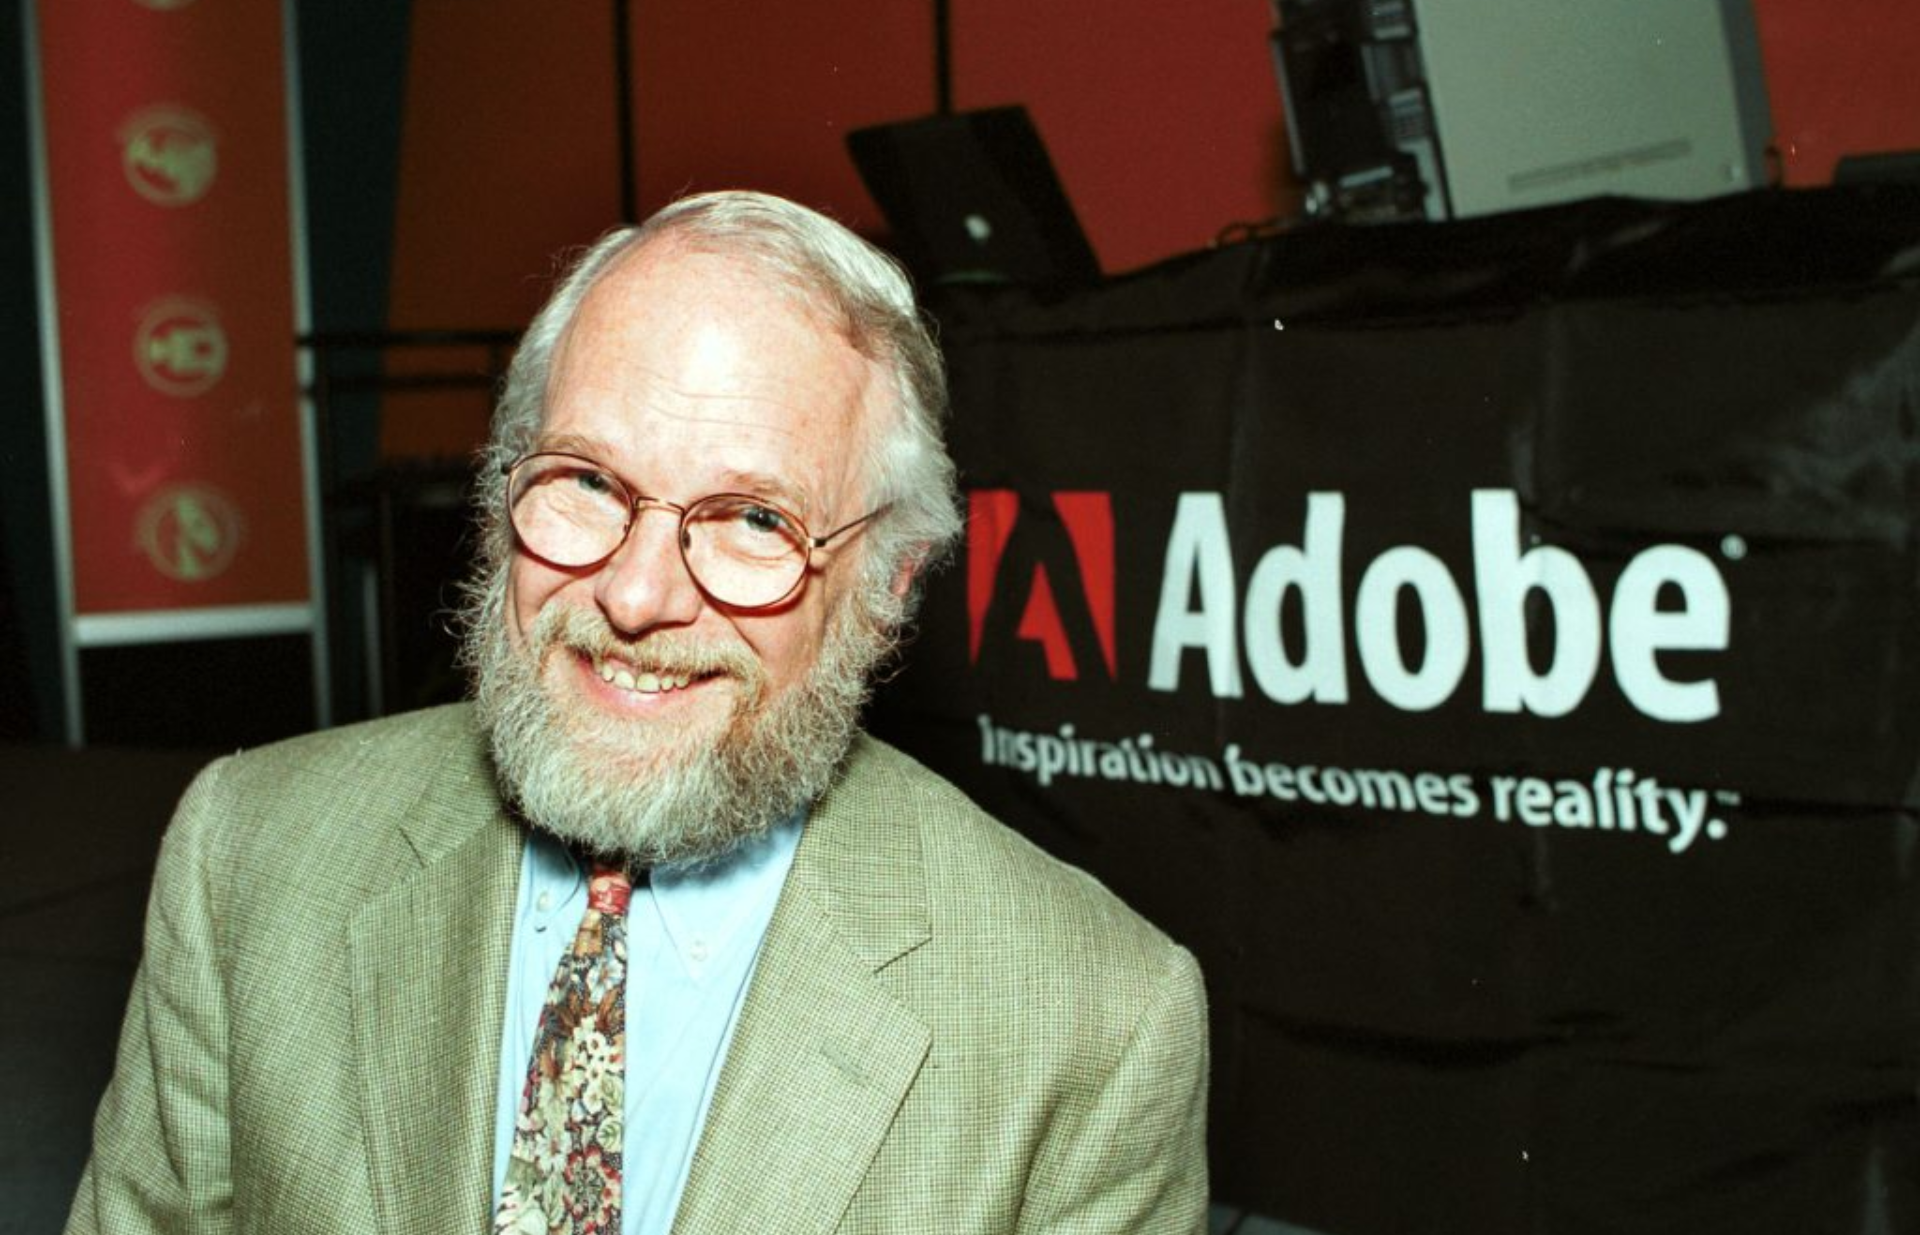 Adobe’s Co-Founder John Warnock Dies at 82